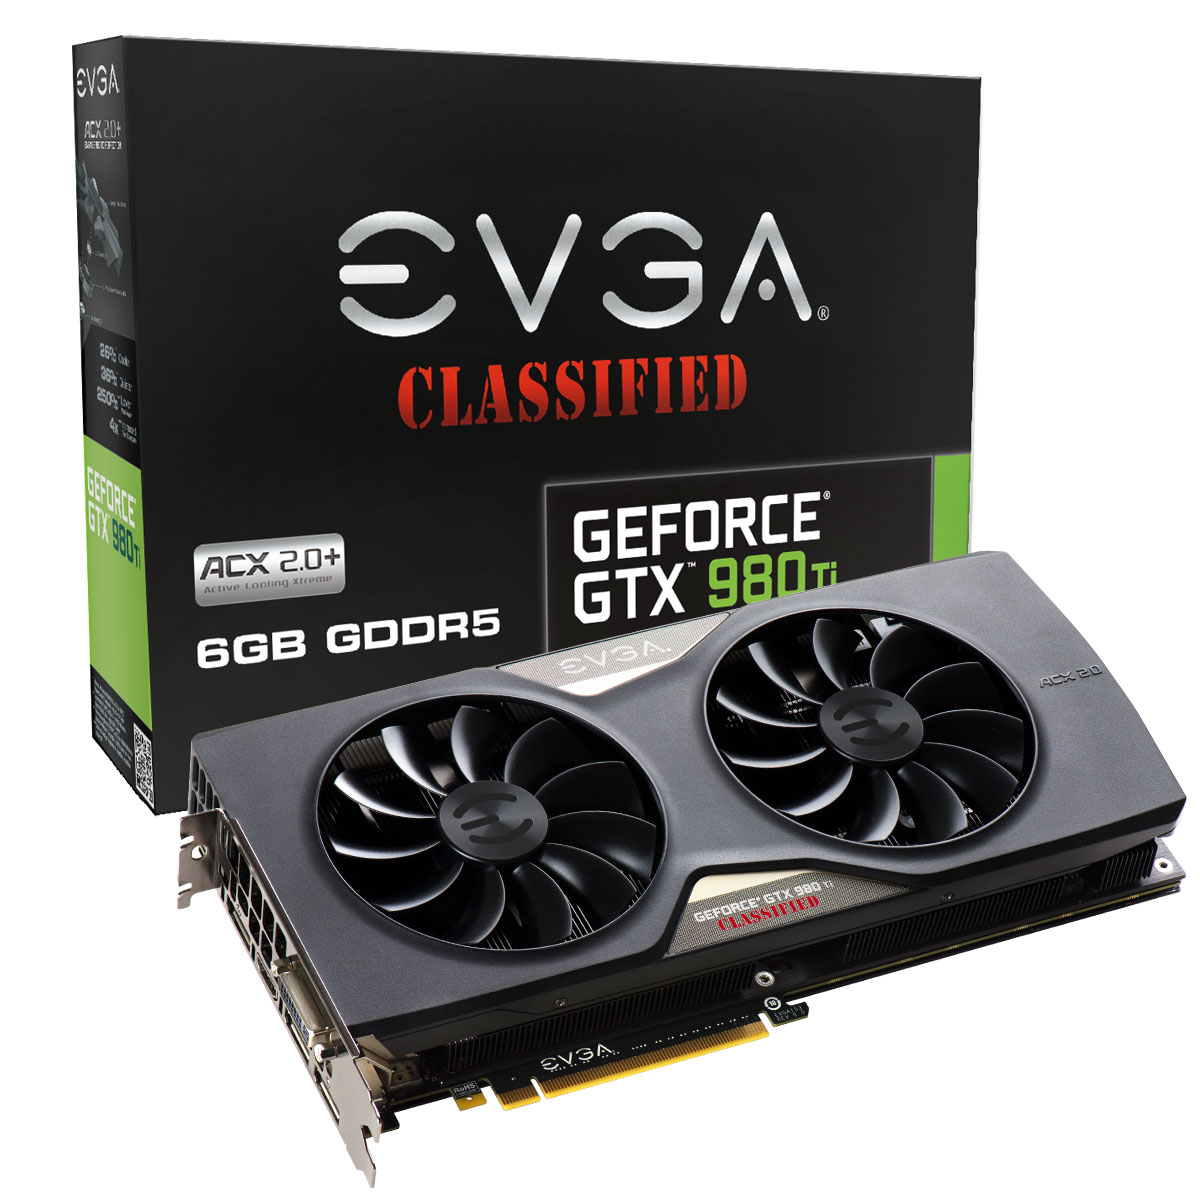 EVGA GeForce GTX 980 Ti Classified ACX 2.0+ announced 21